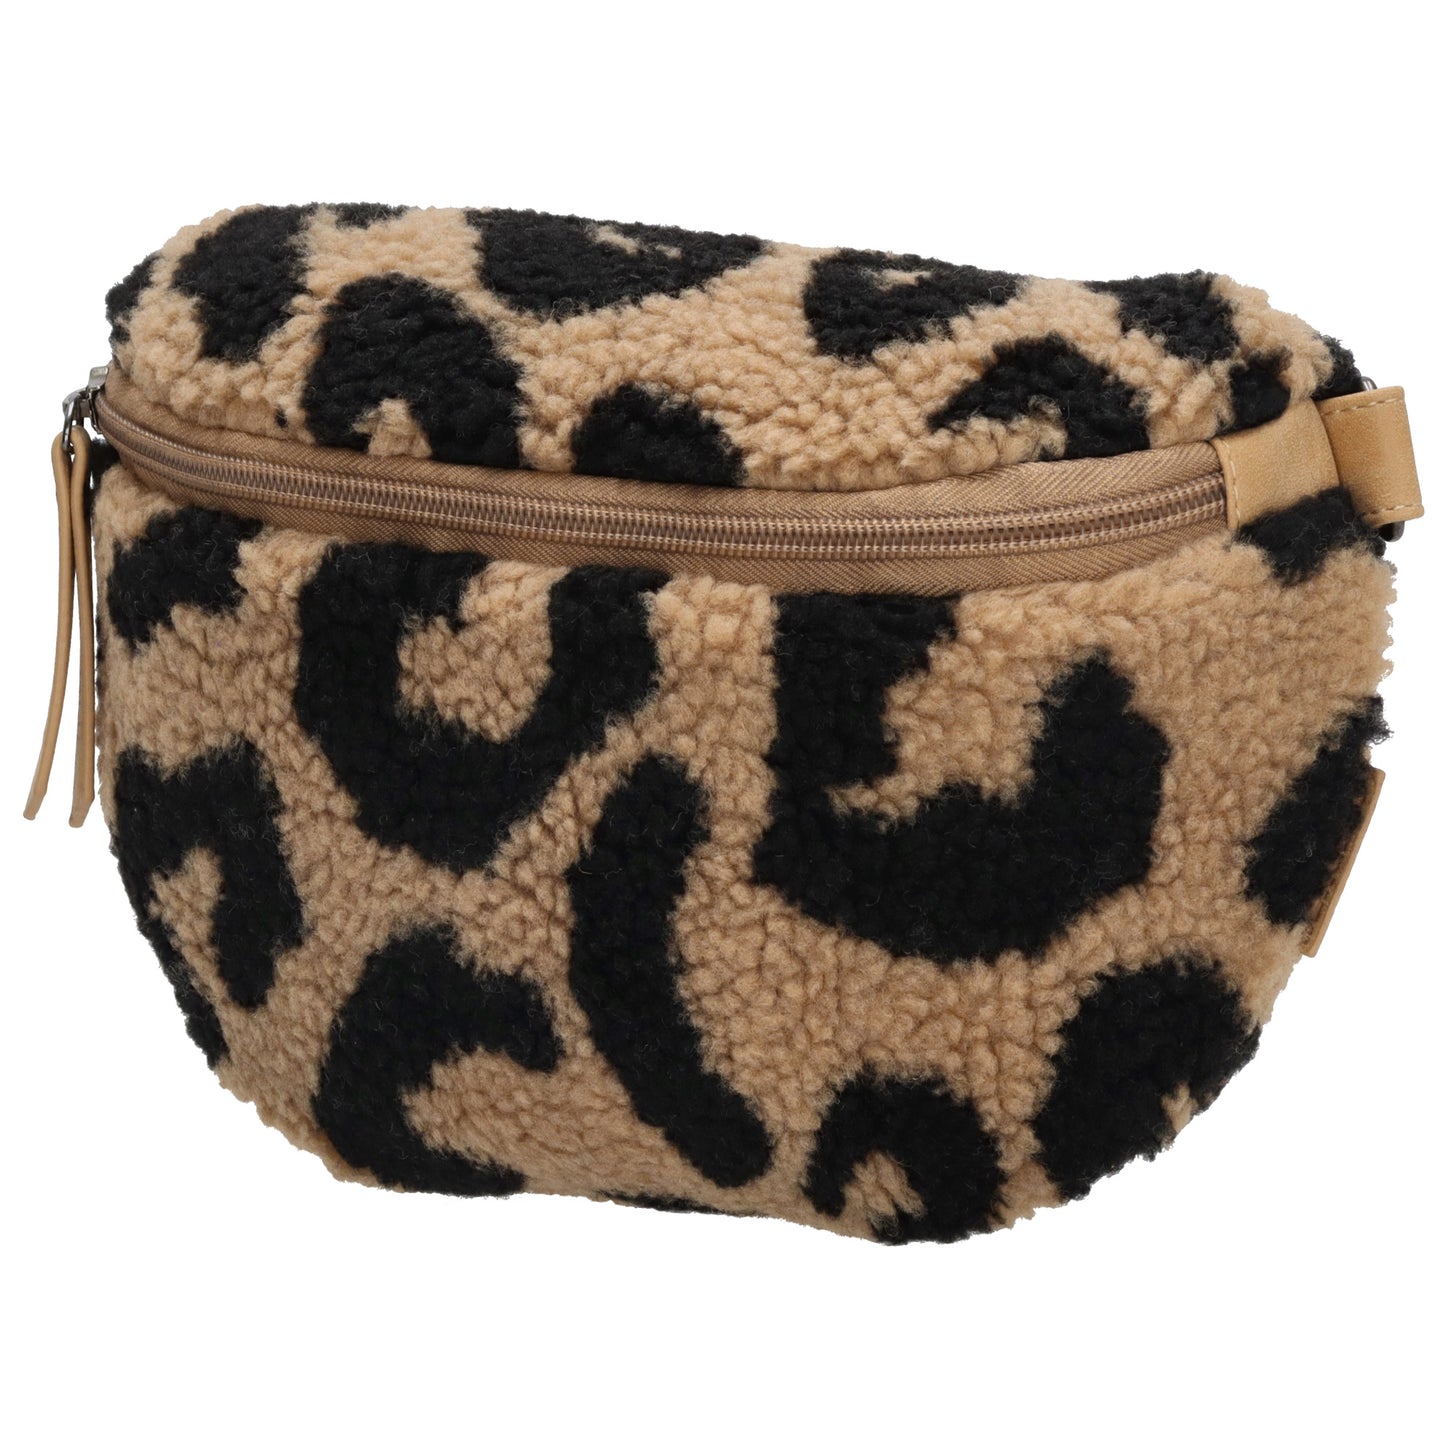 Bodybag in Teddyfell 25x15cm in Leopard|Braun